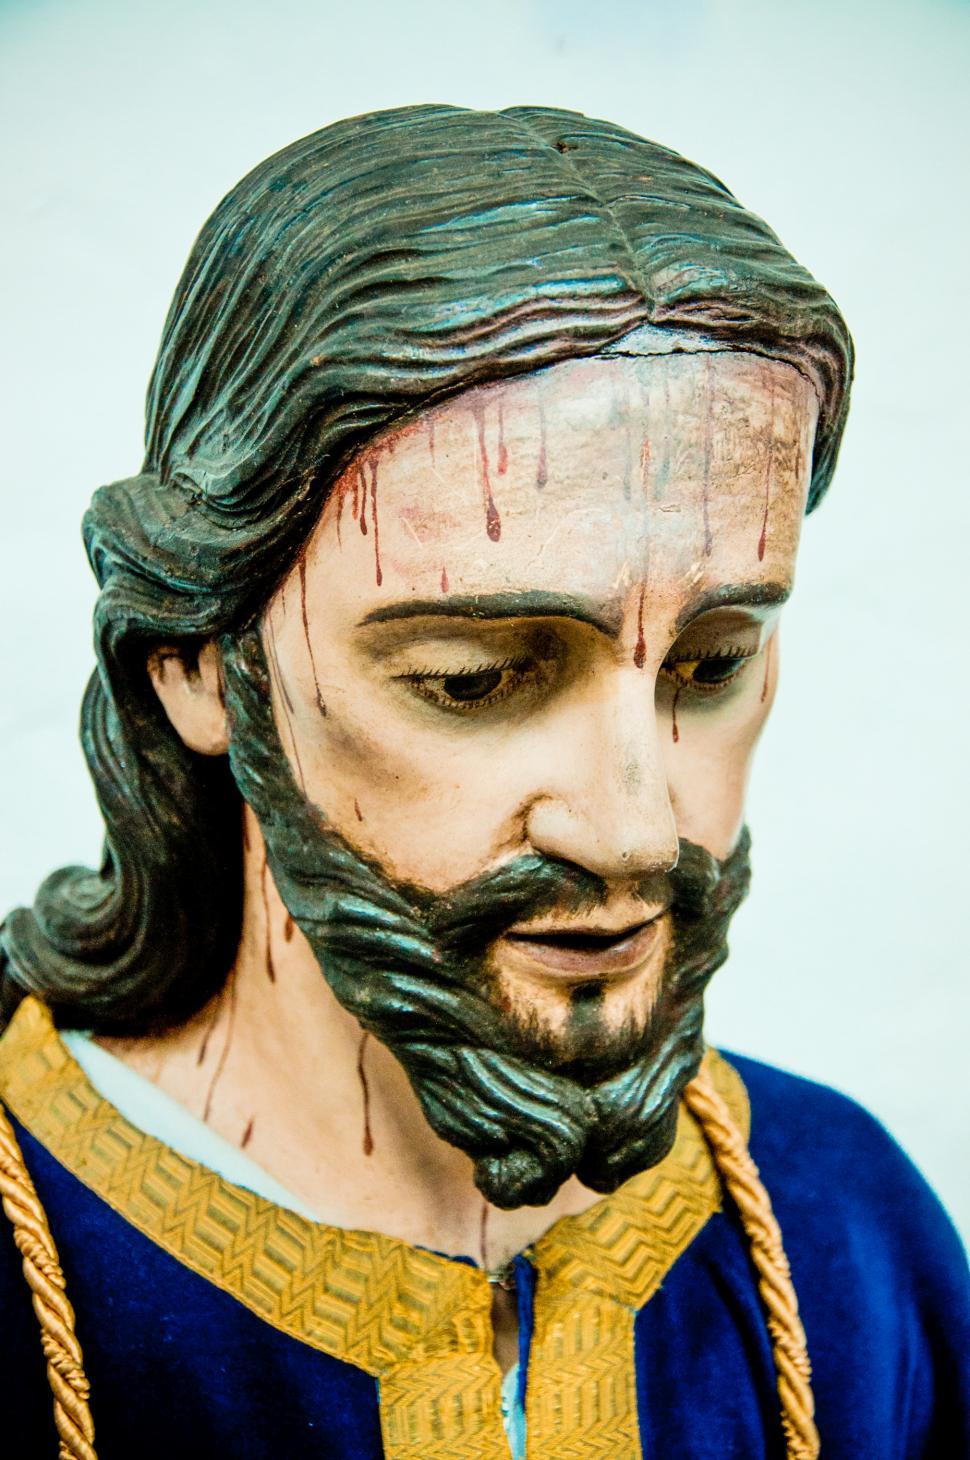 Download Free Stock Photo of Jesus Christ Statue 